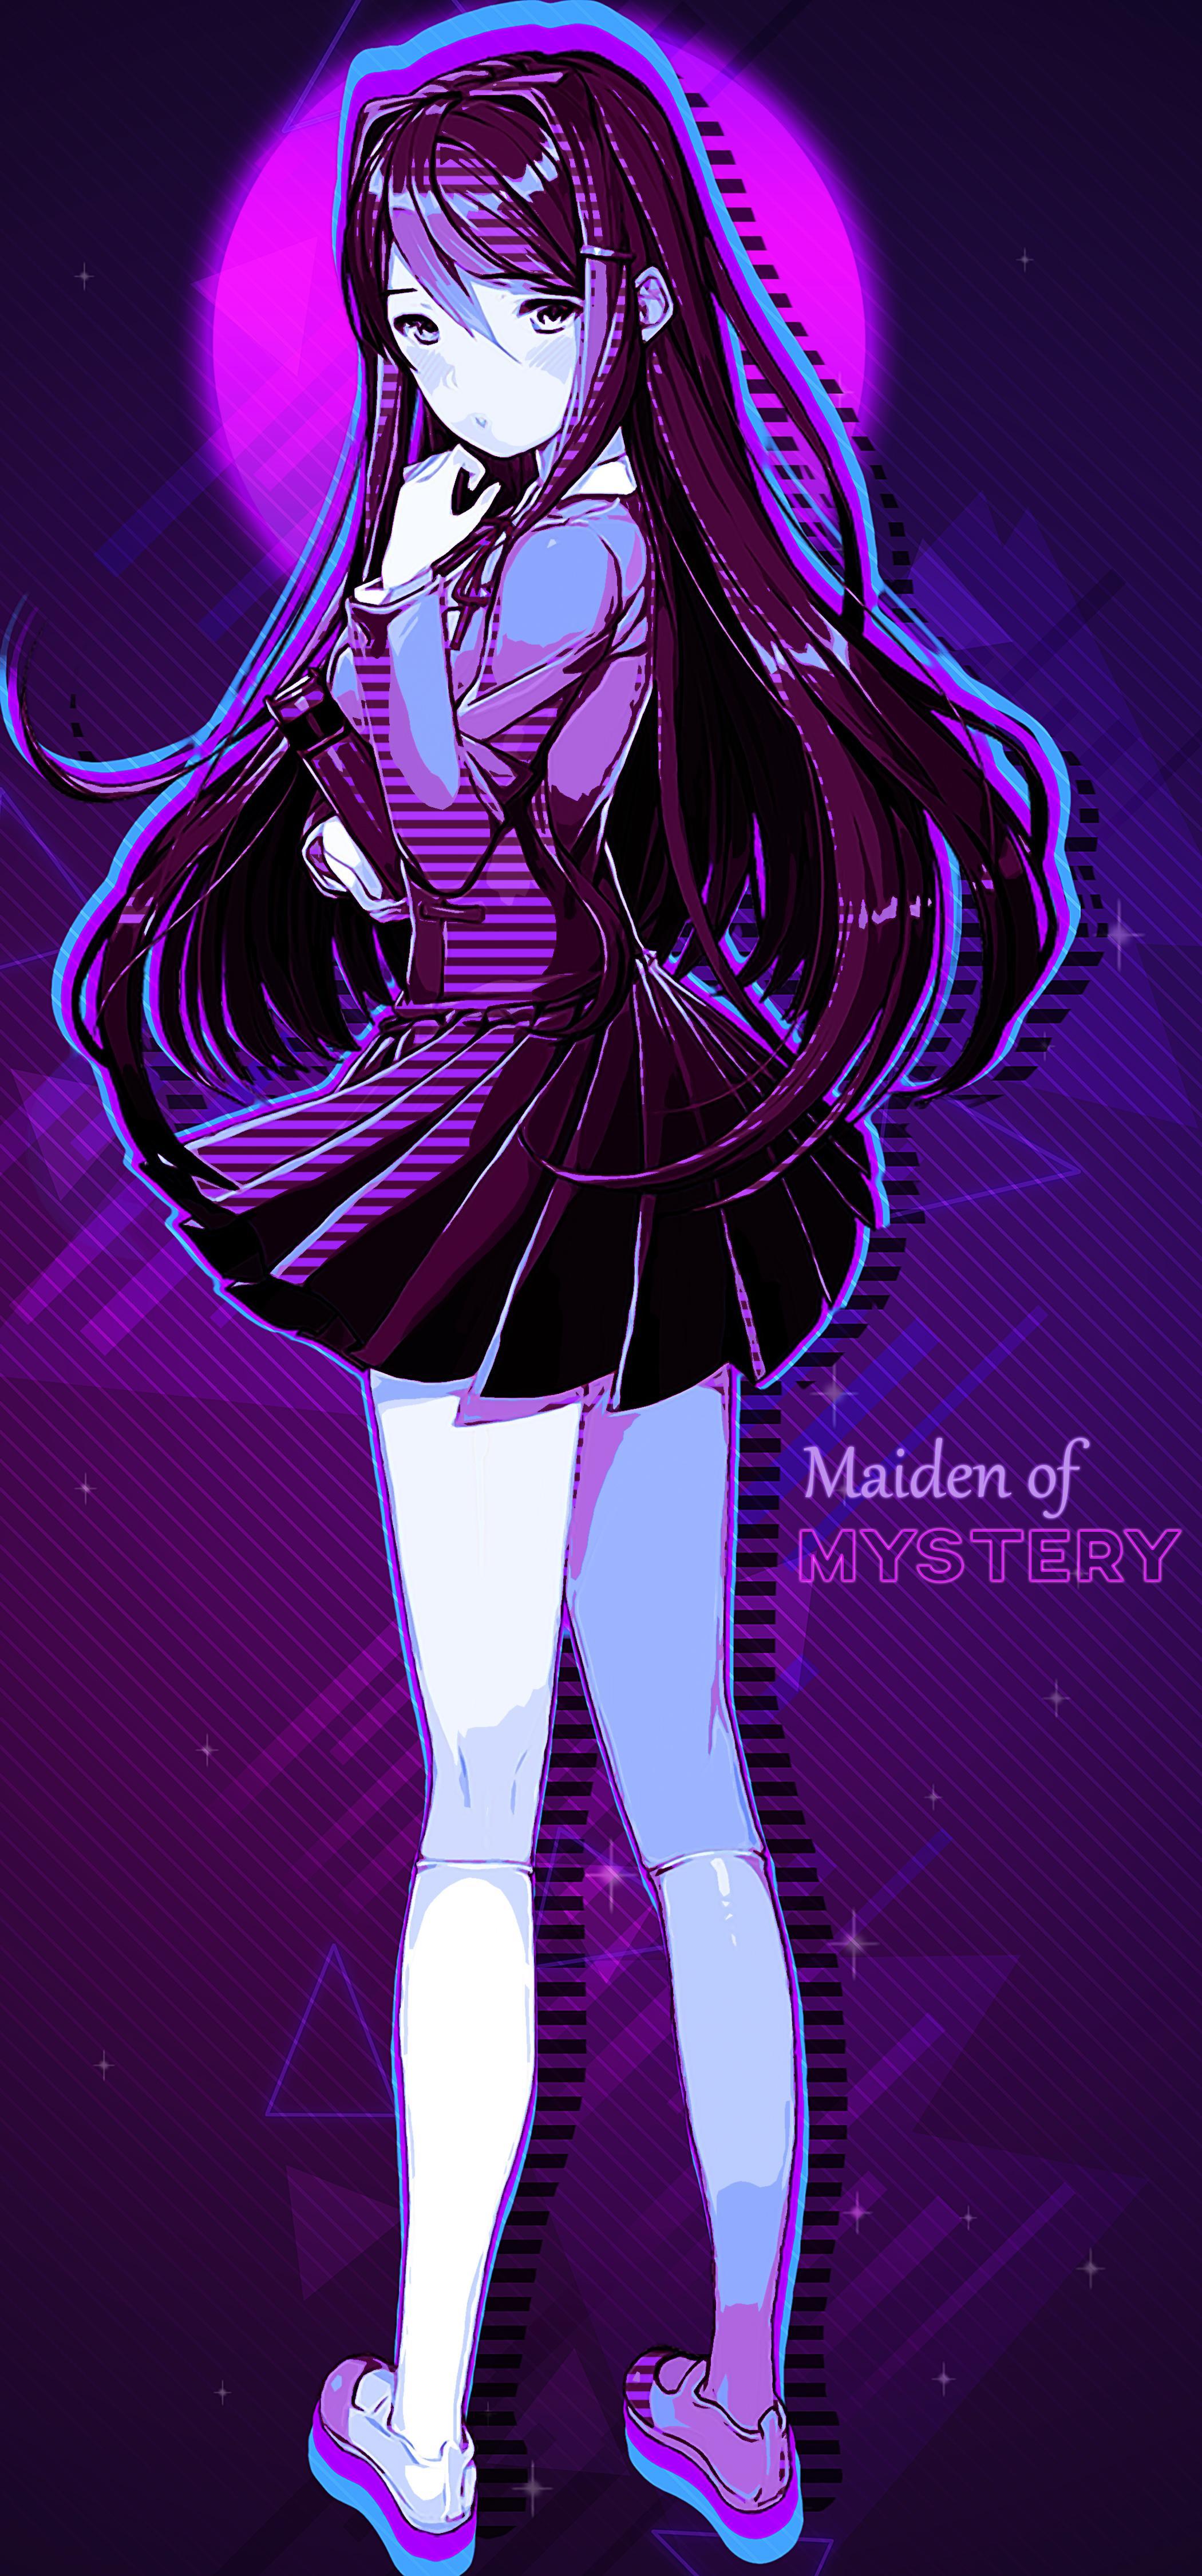 the maiden of mystery (80s yuri wallpaper)